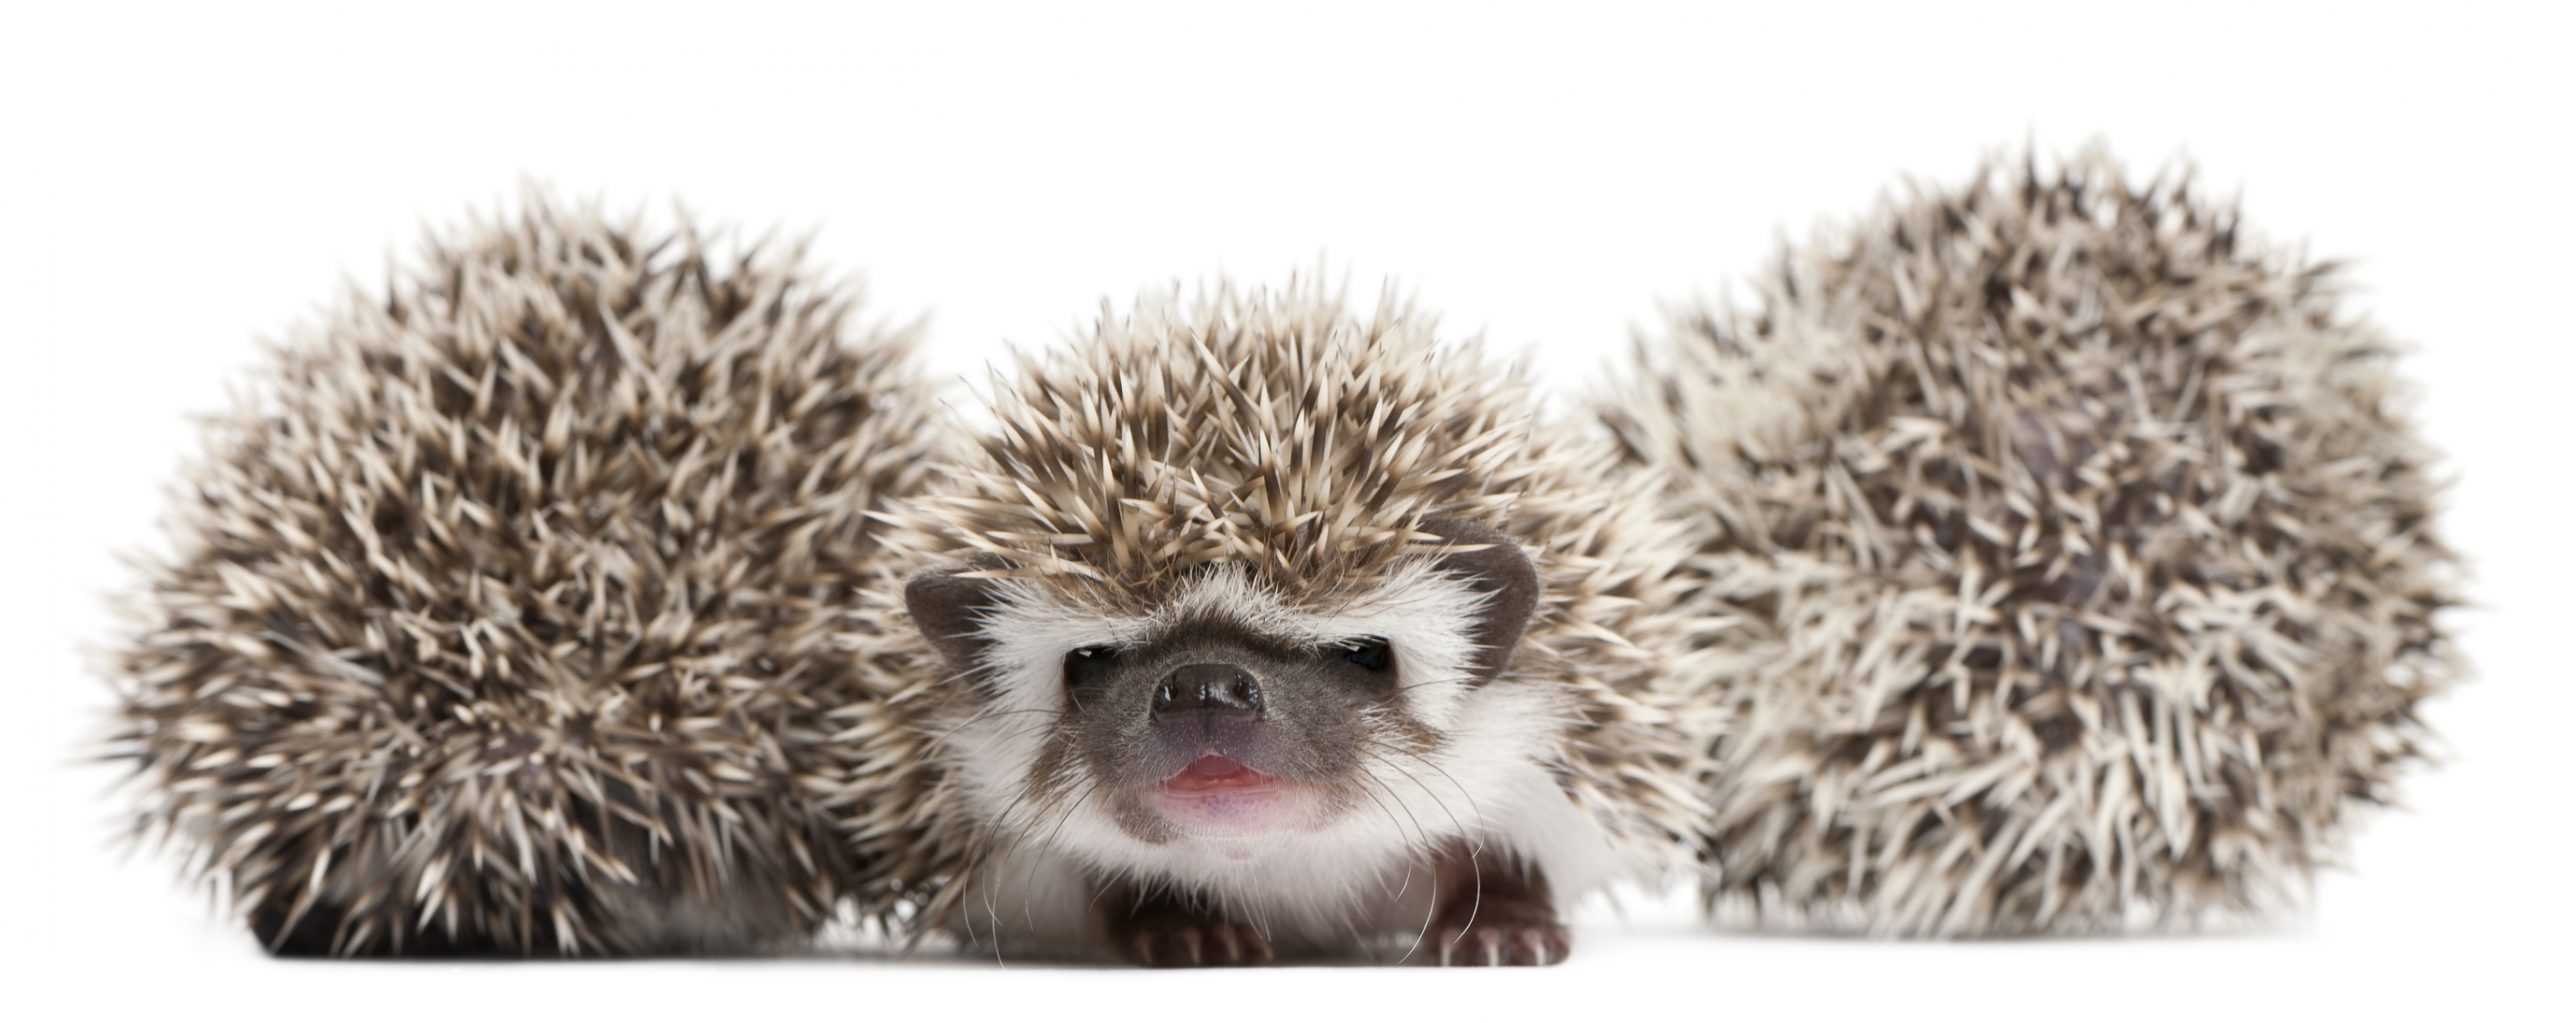 Three Four Toed Hedgehogs, Atelerix Albiventris, 3 Weeks Old.